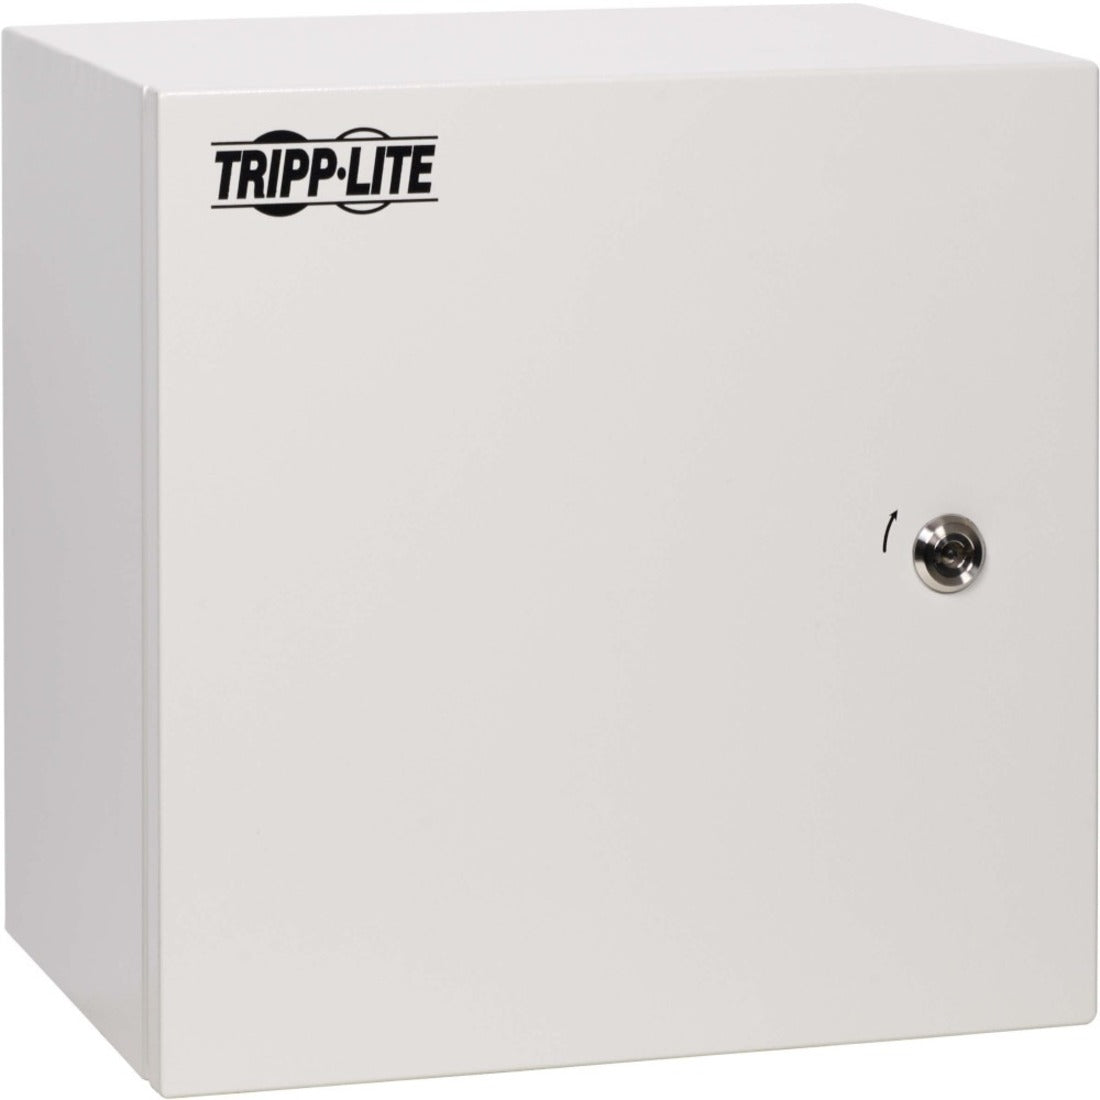 Tripp Lite SRIN4141410 Industrial Locking Metal Outdoor Enclosure, NEMA 4, 14x14x10in